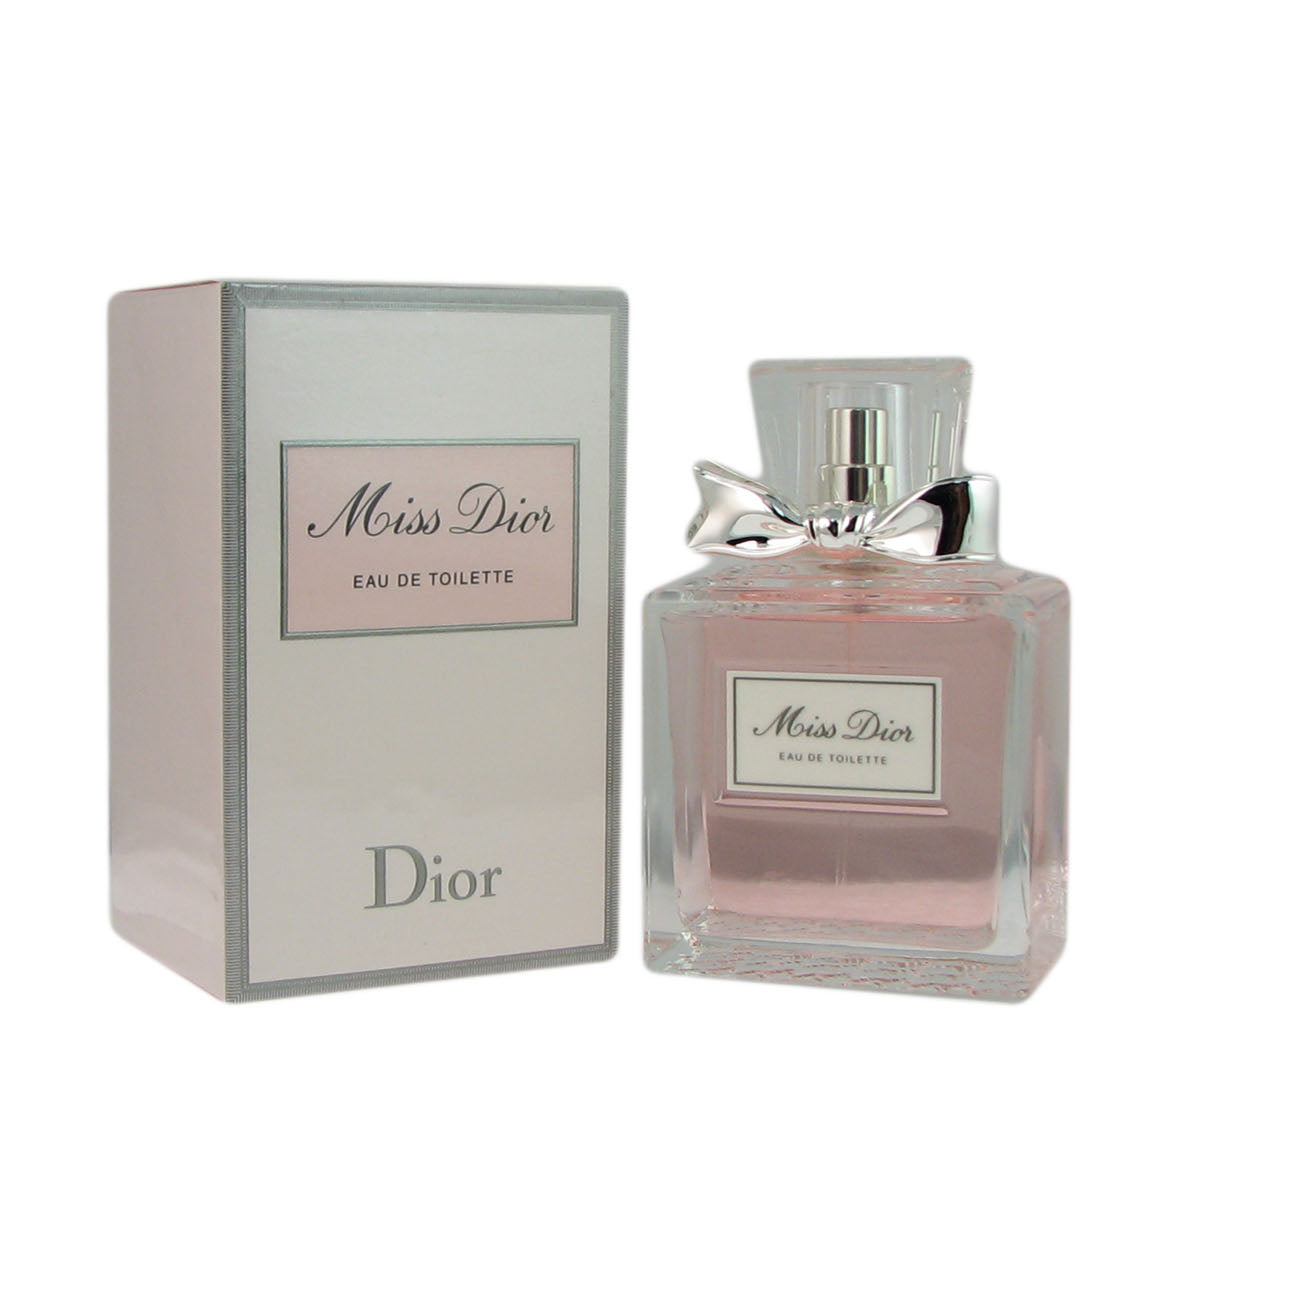 Miss Dior for Women by Dior 3.4 oz Eau de Toilette Spray